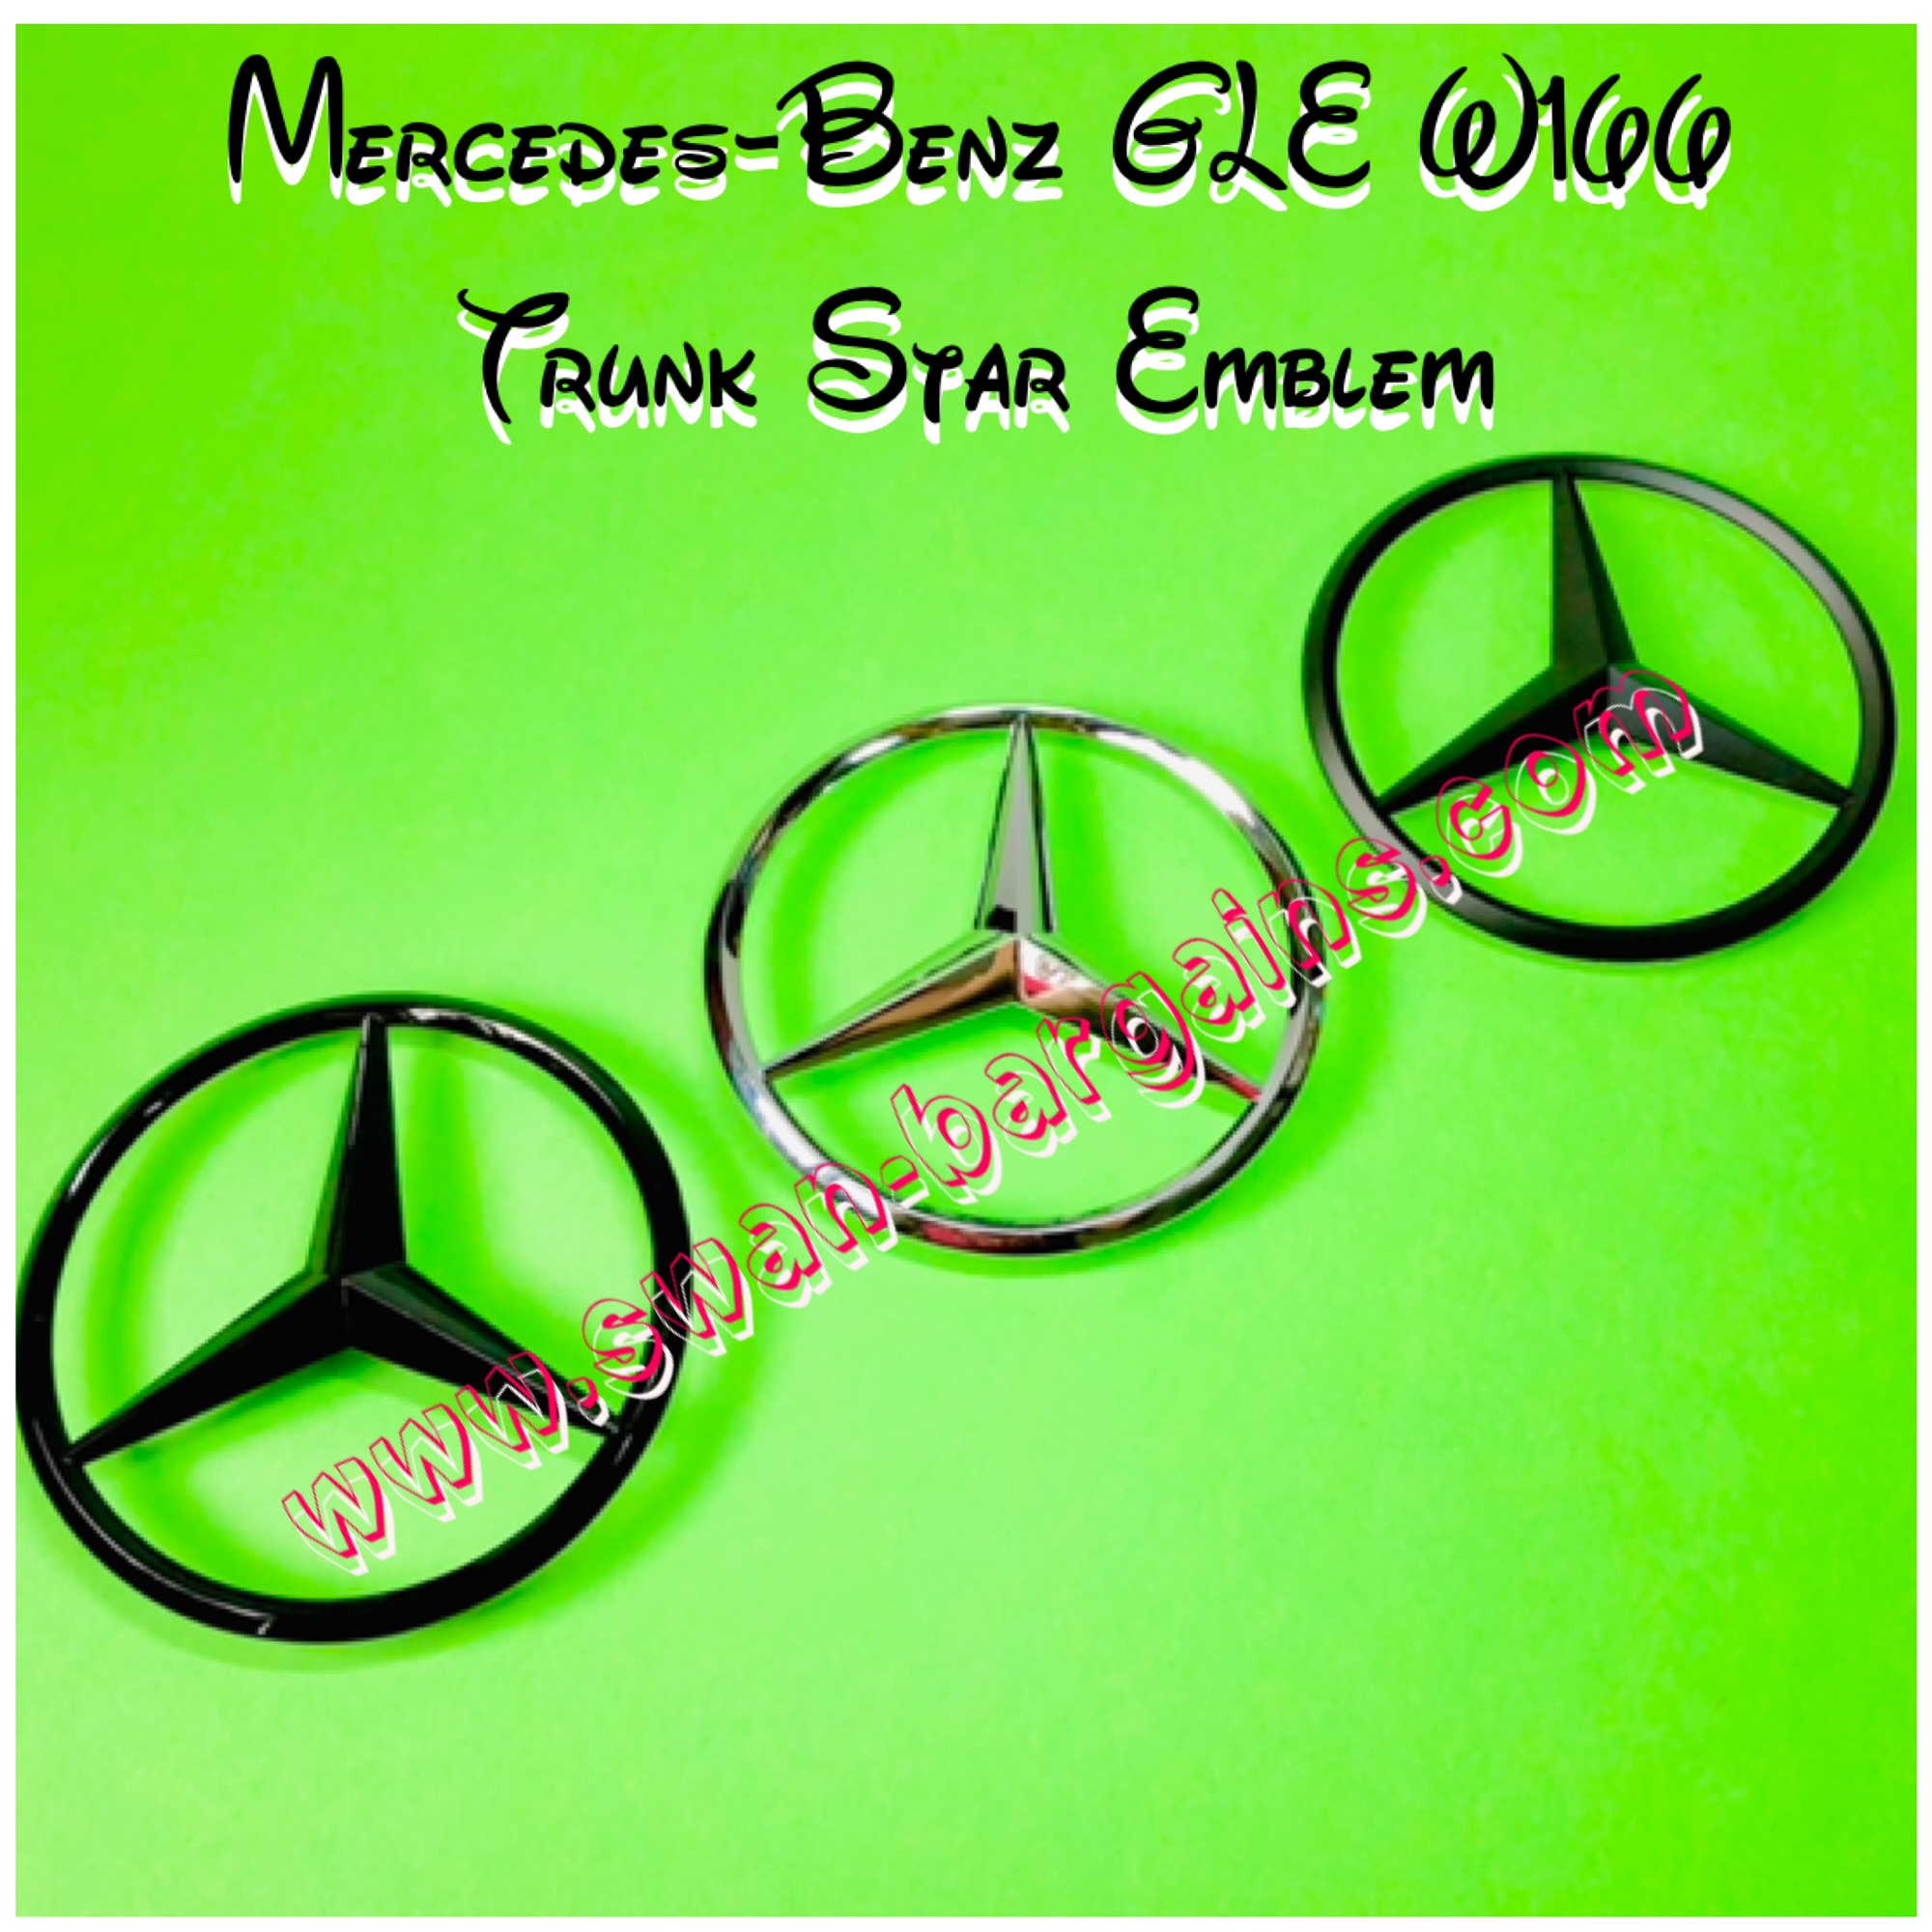 Benz GLE Class Trunk Star Replacement Emblem Singapore